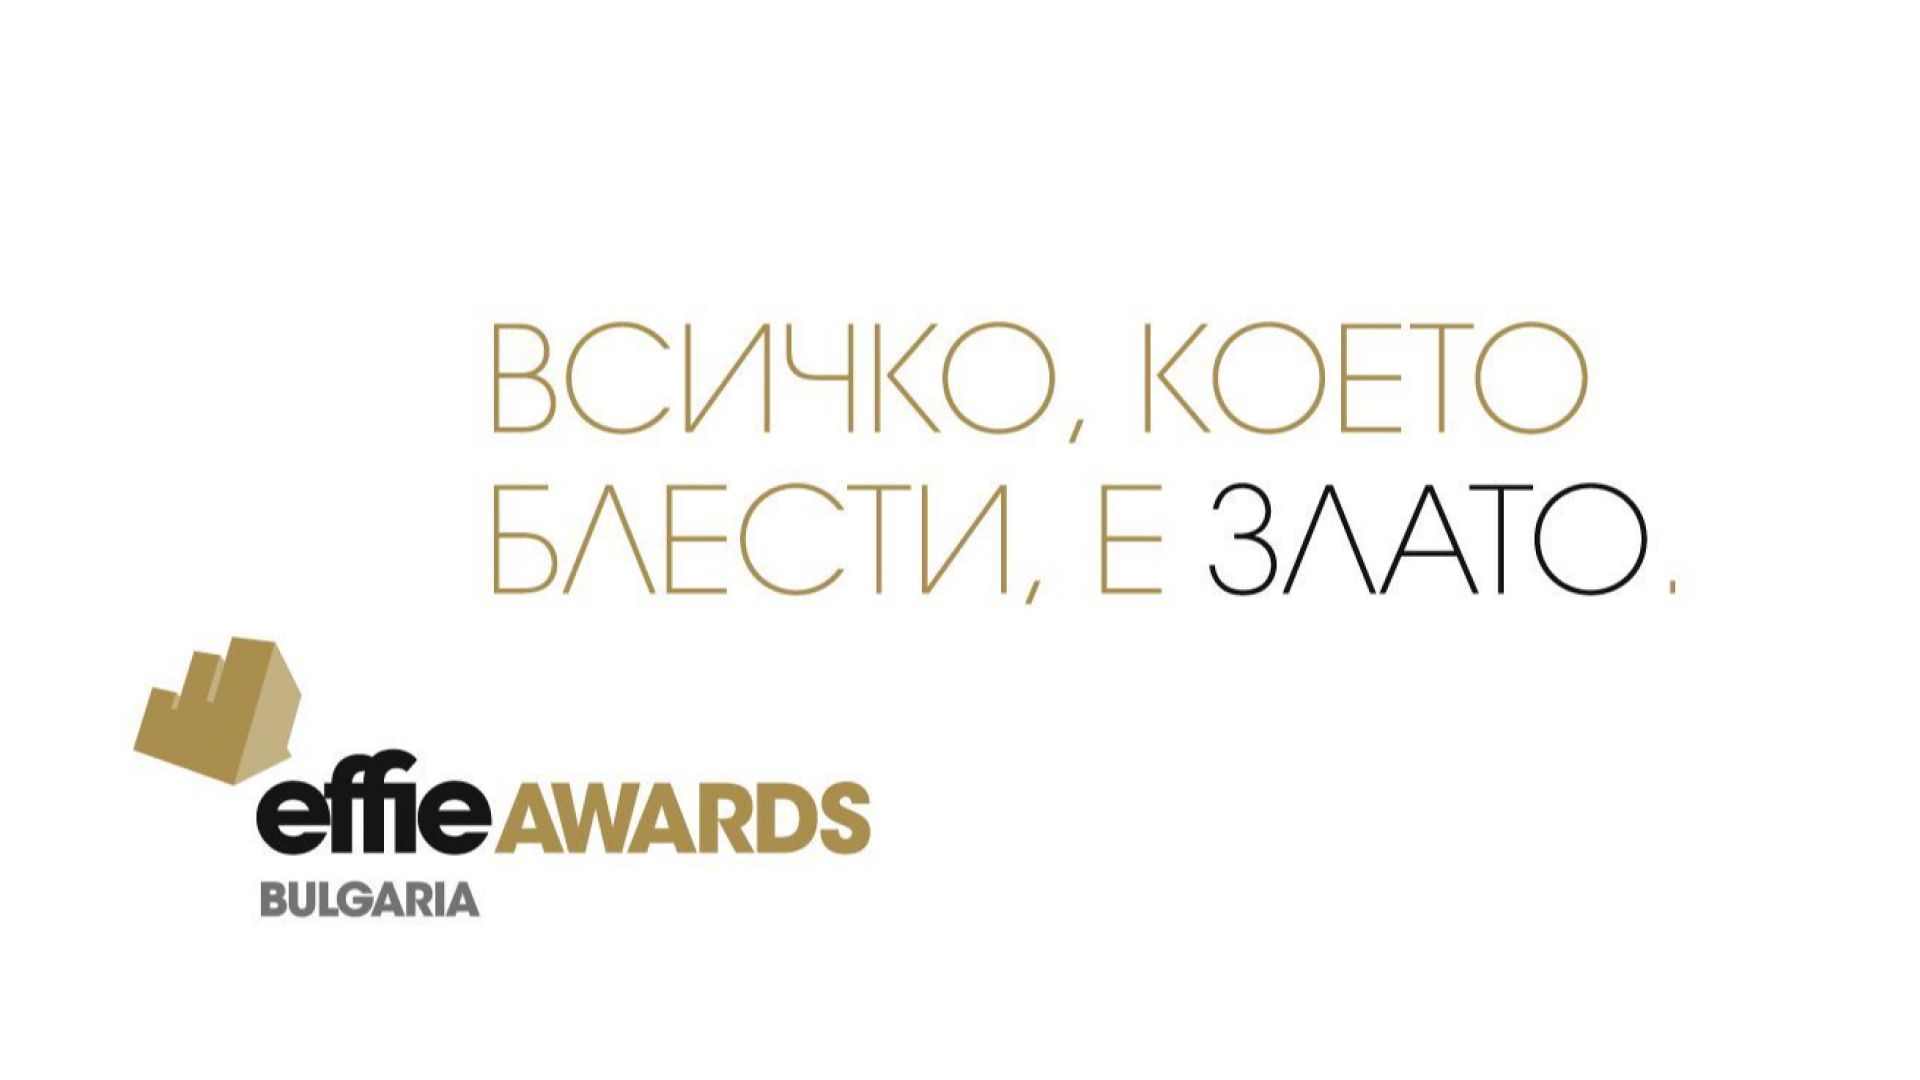 Effie® Awards България 2020 ще се проведе в края на 2020